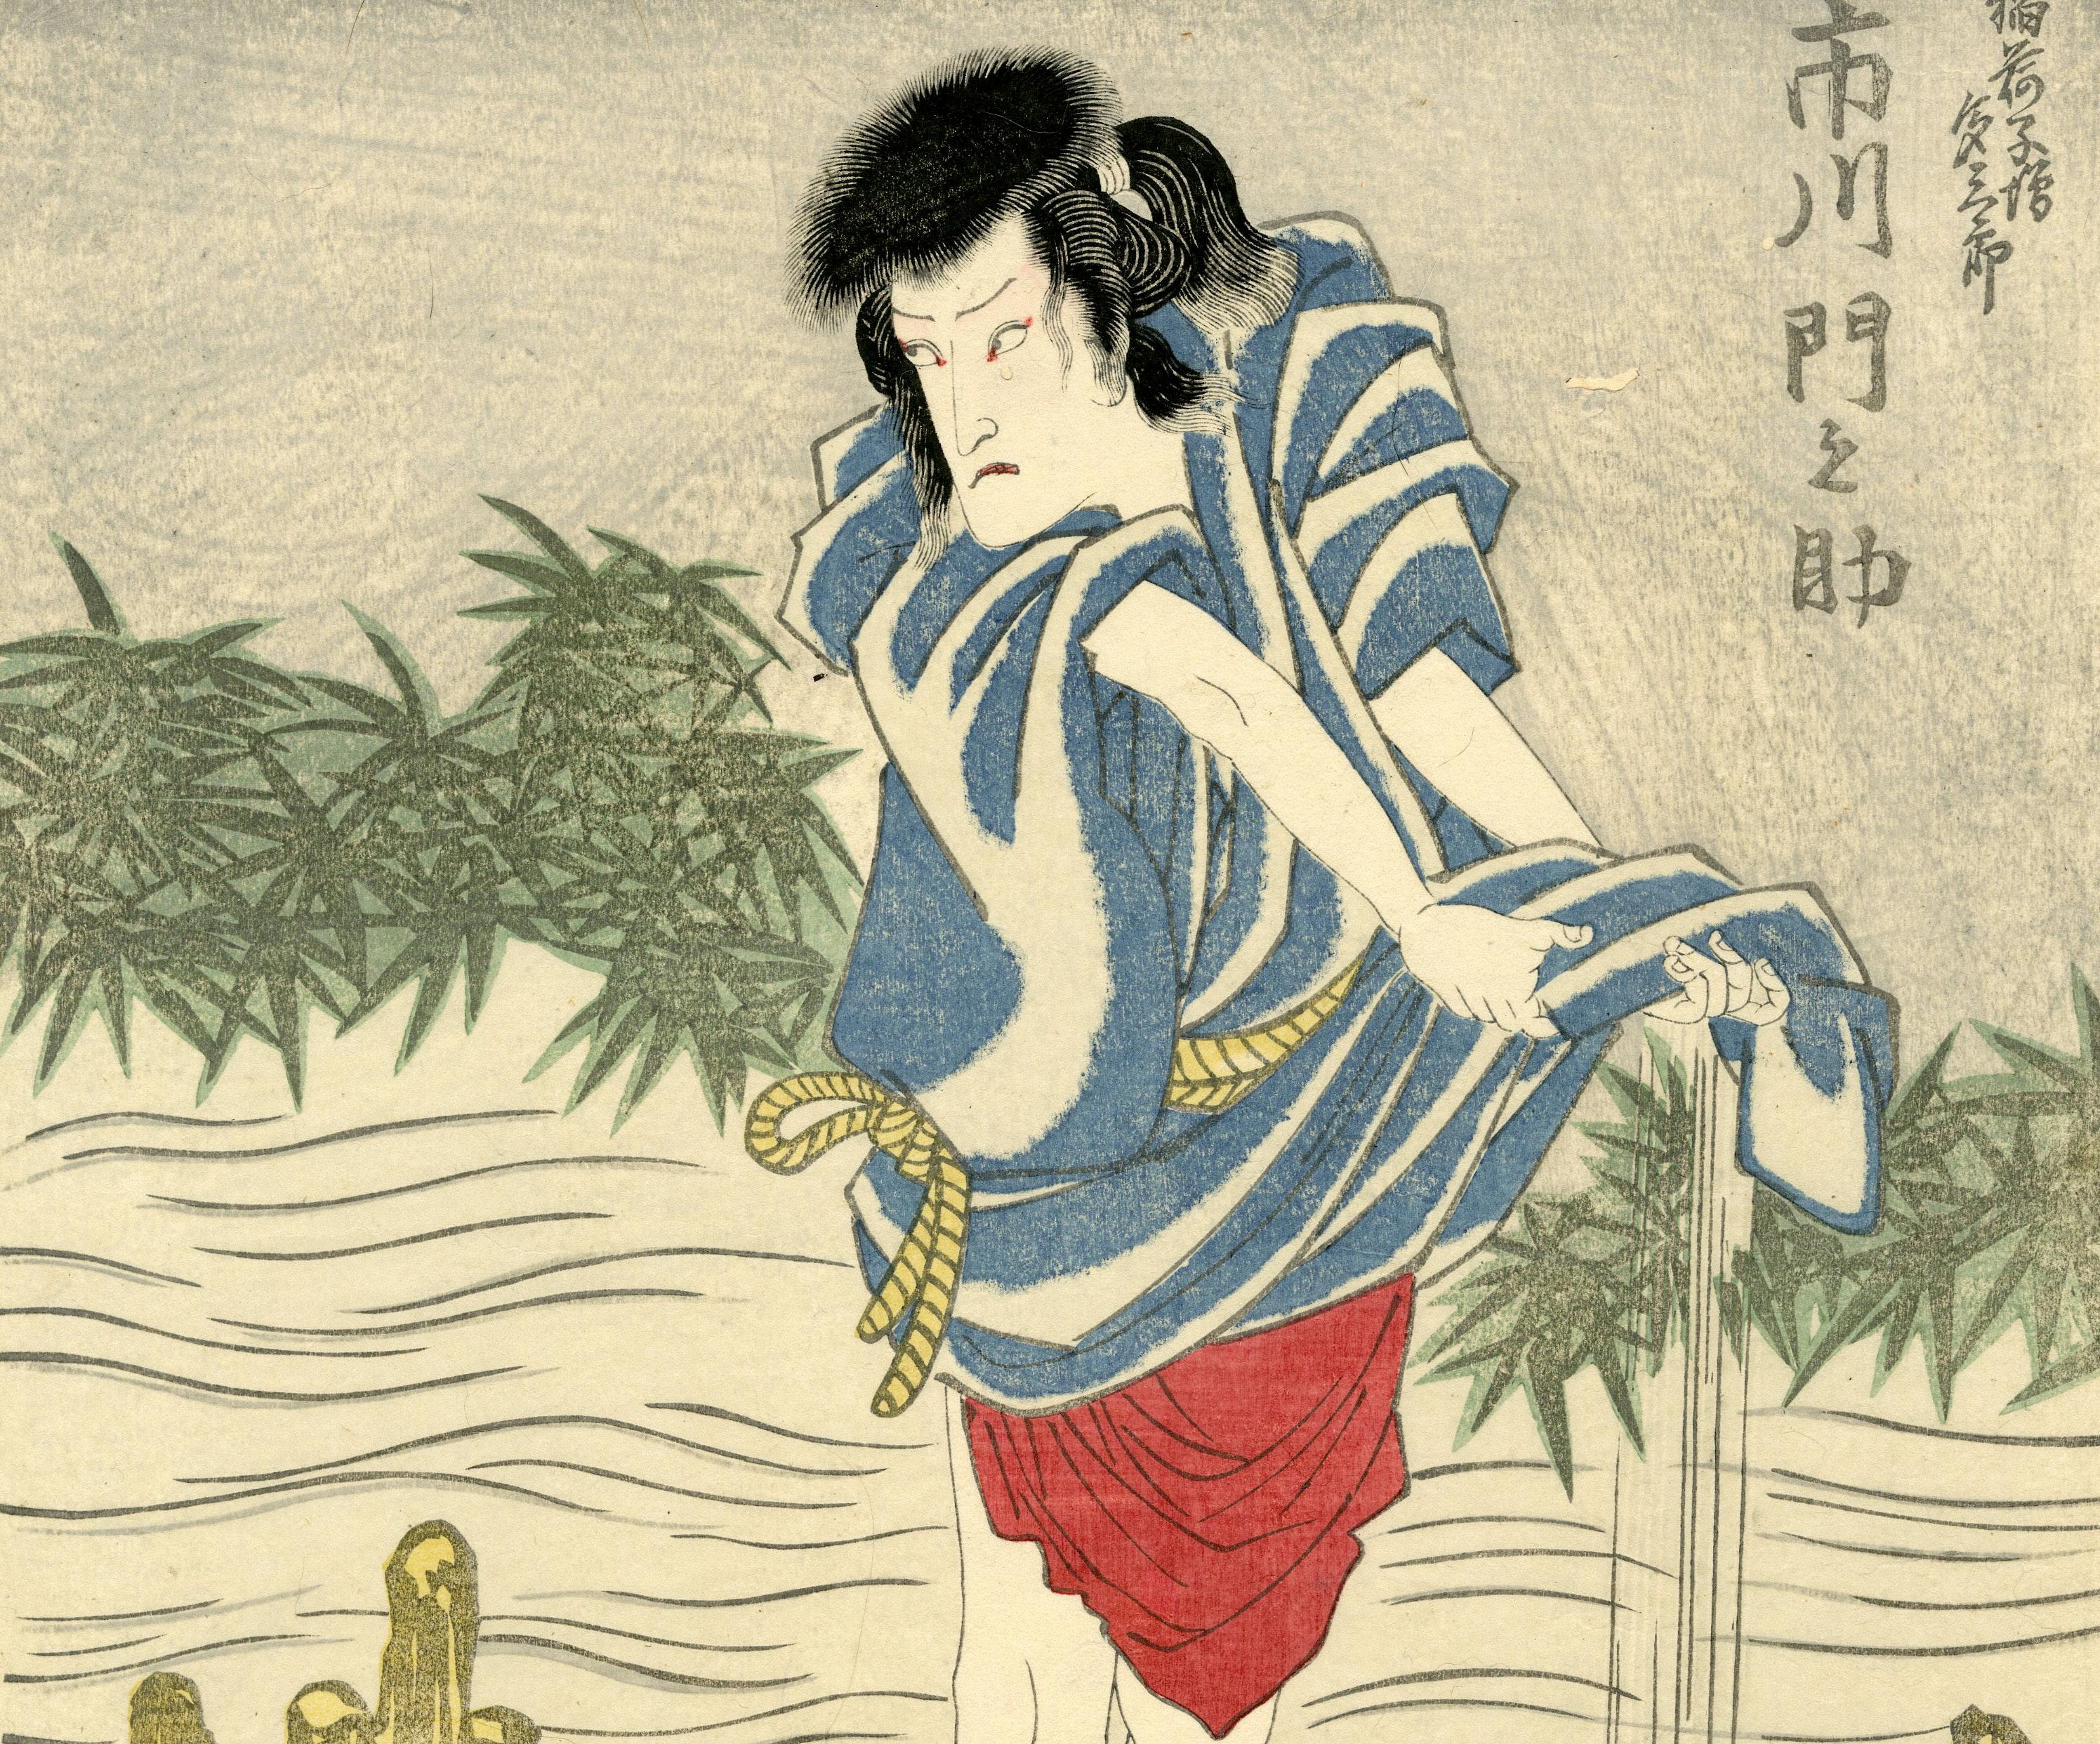 Inari Kozo Tasaburo- Kabuki
Color woodcut, c. 1820
Signed: ‘Toyokuni’
Publisher: ‘Yamamoto Heikichi’
Censor: Hama and Magome
Very good impression and color
Sheet/Image size: 15 1/2 x 10 5/8 inches
Note: Kabuki actor Ichikawa Monnosuke is in the role